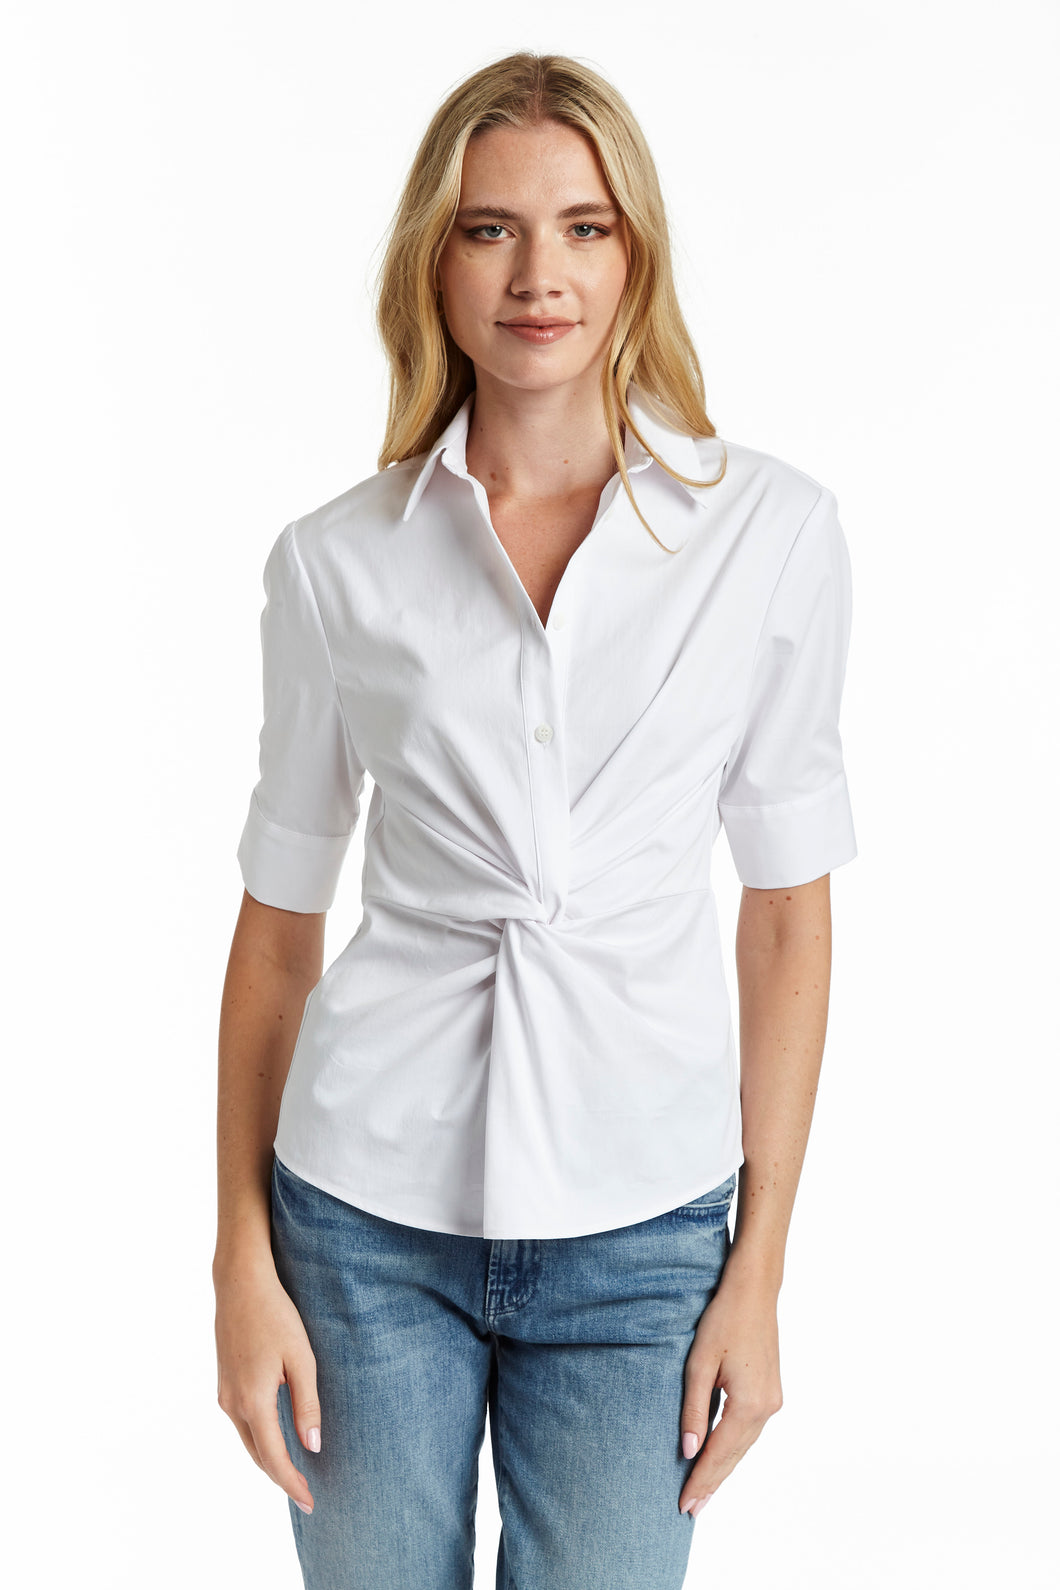 Model wearing Drew - Hailey Shirt in White.